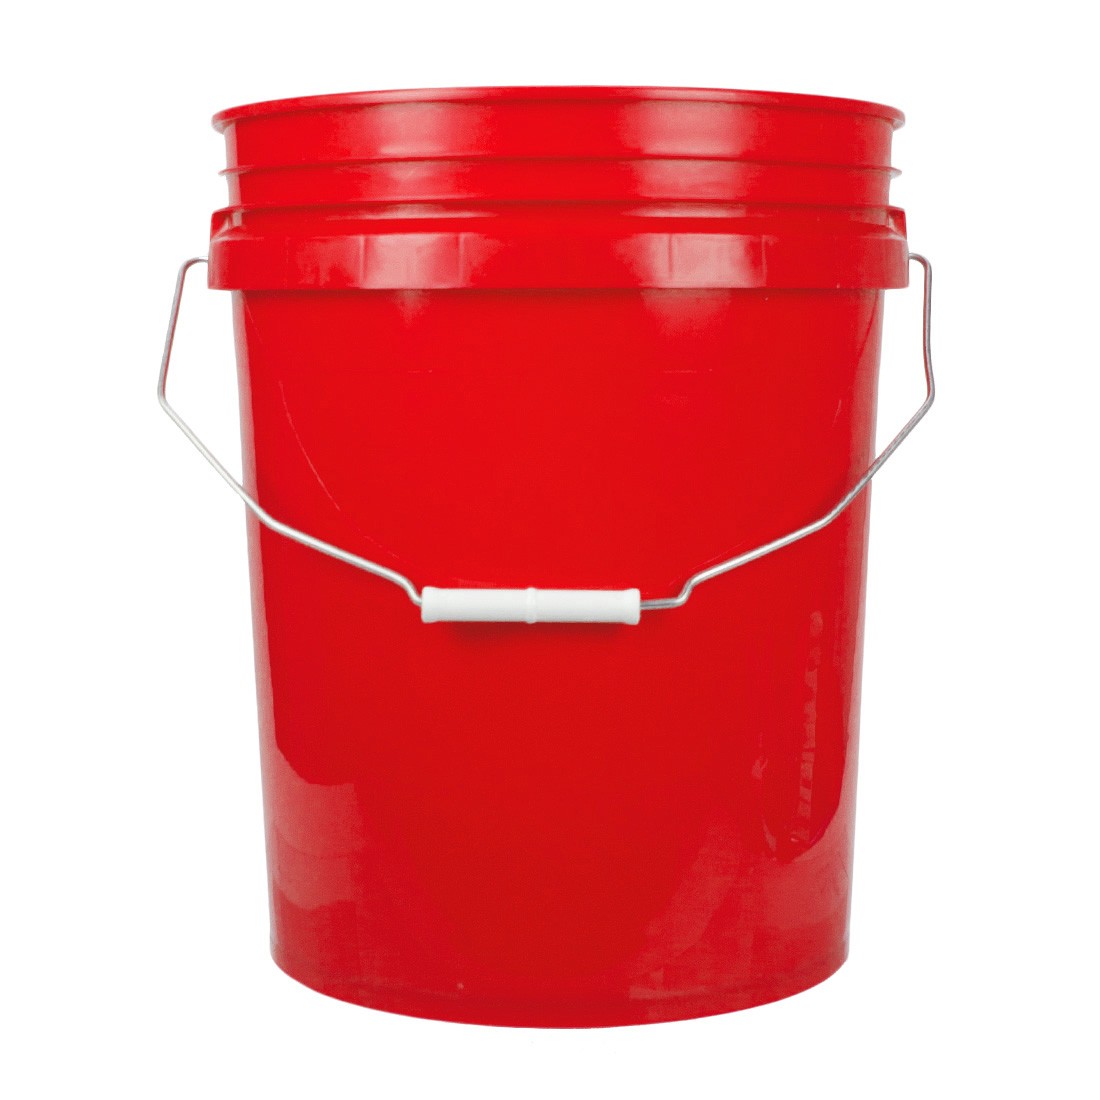 XERO Round Bucket Red Front View